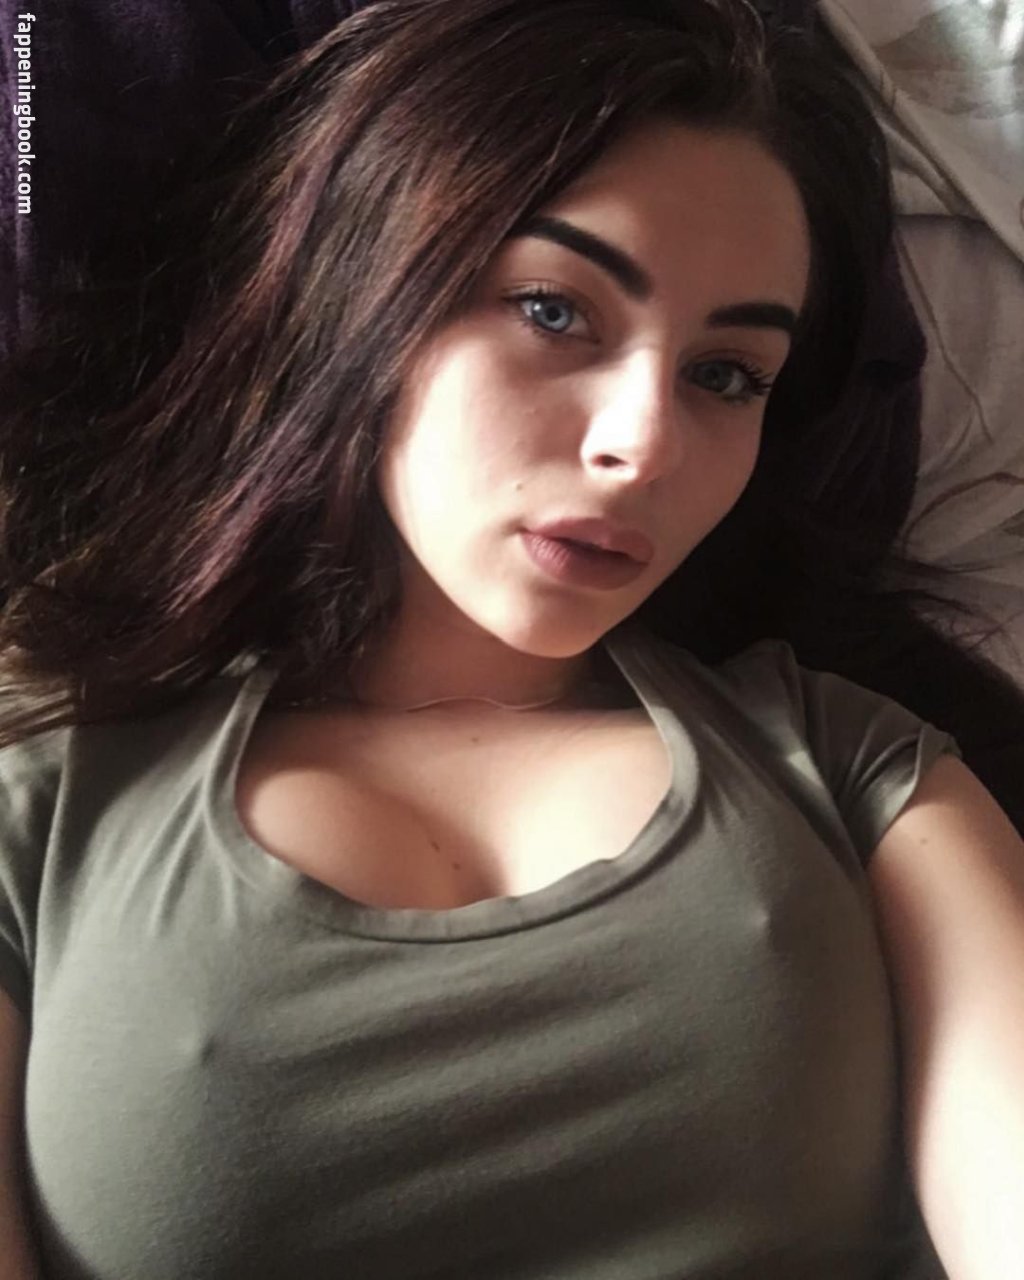 Mikhalina novakovskaya nude